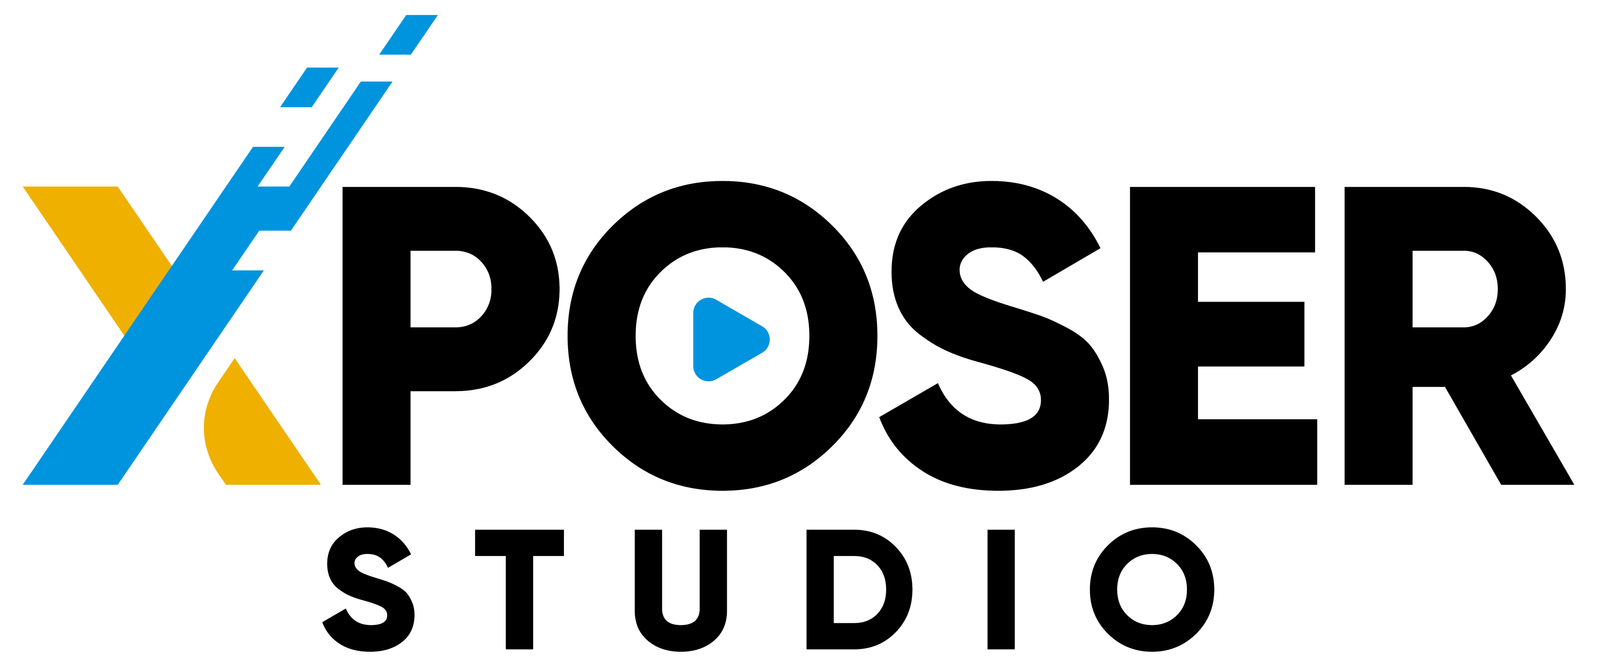 Xposer Studio